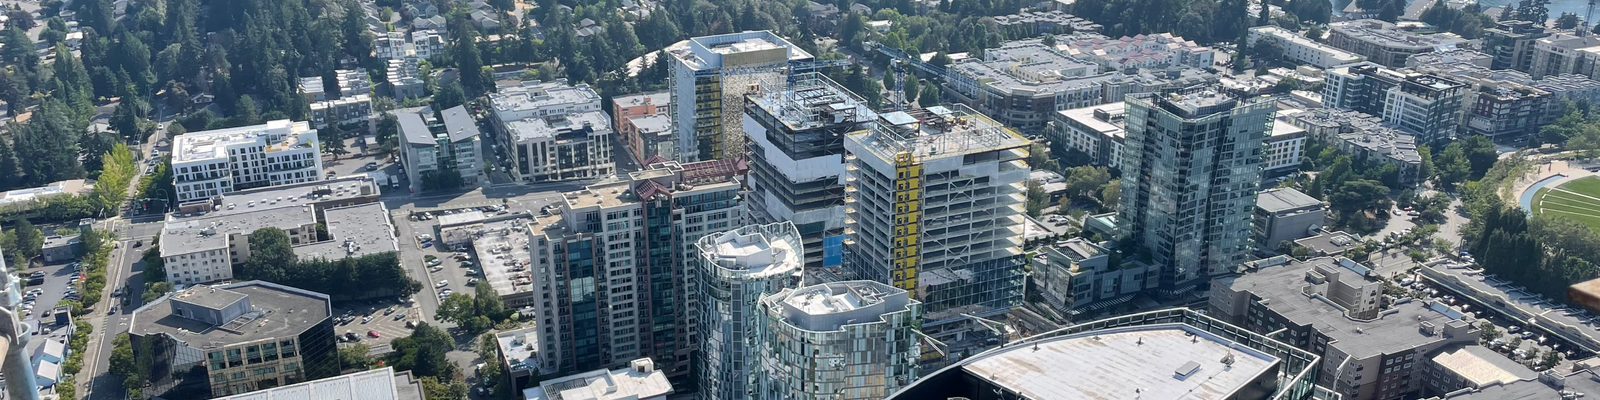 An aerial image of buildings in downtown Bellevue